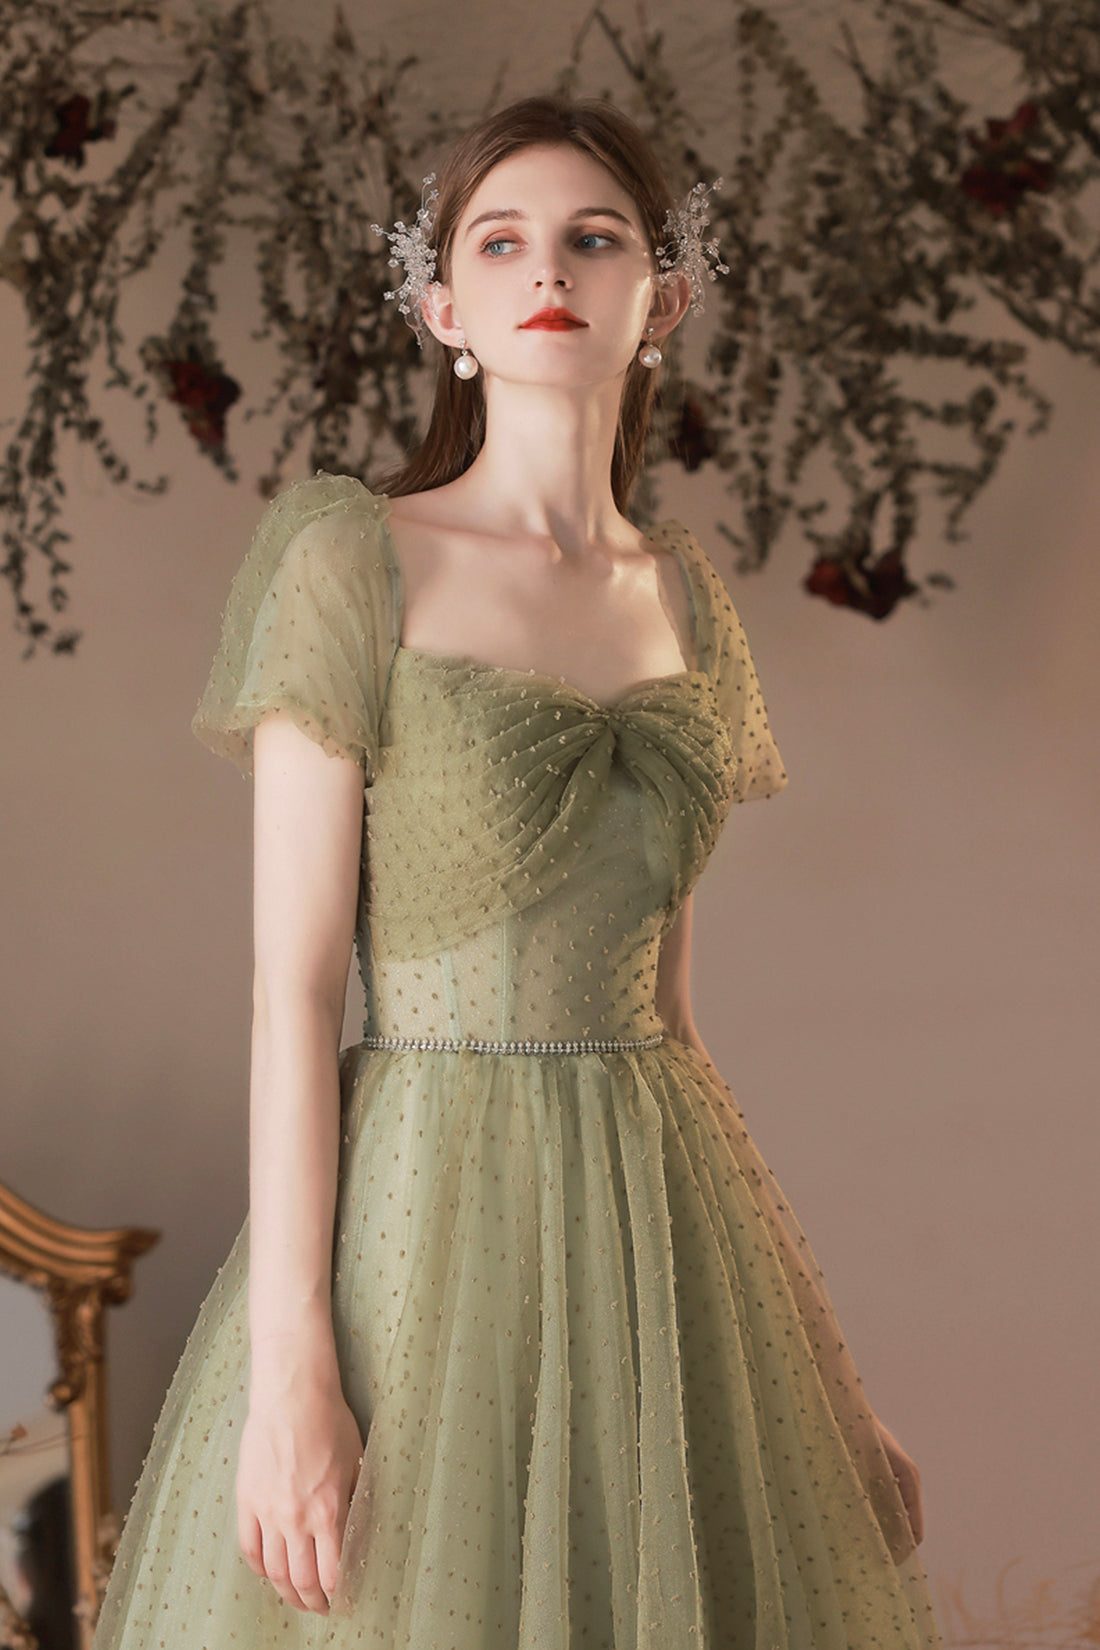 Green Tulle Long A-Line Prom Dress, Cute Evening Dress